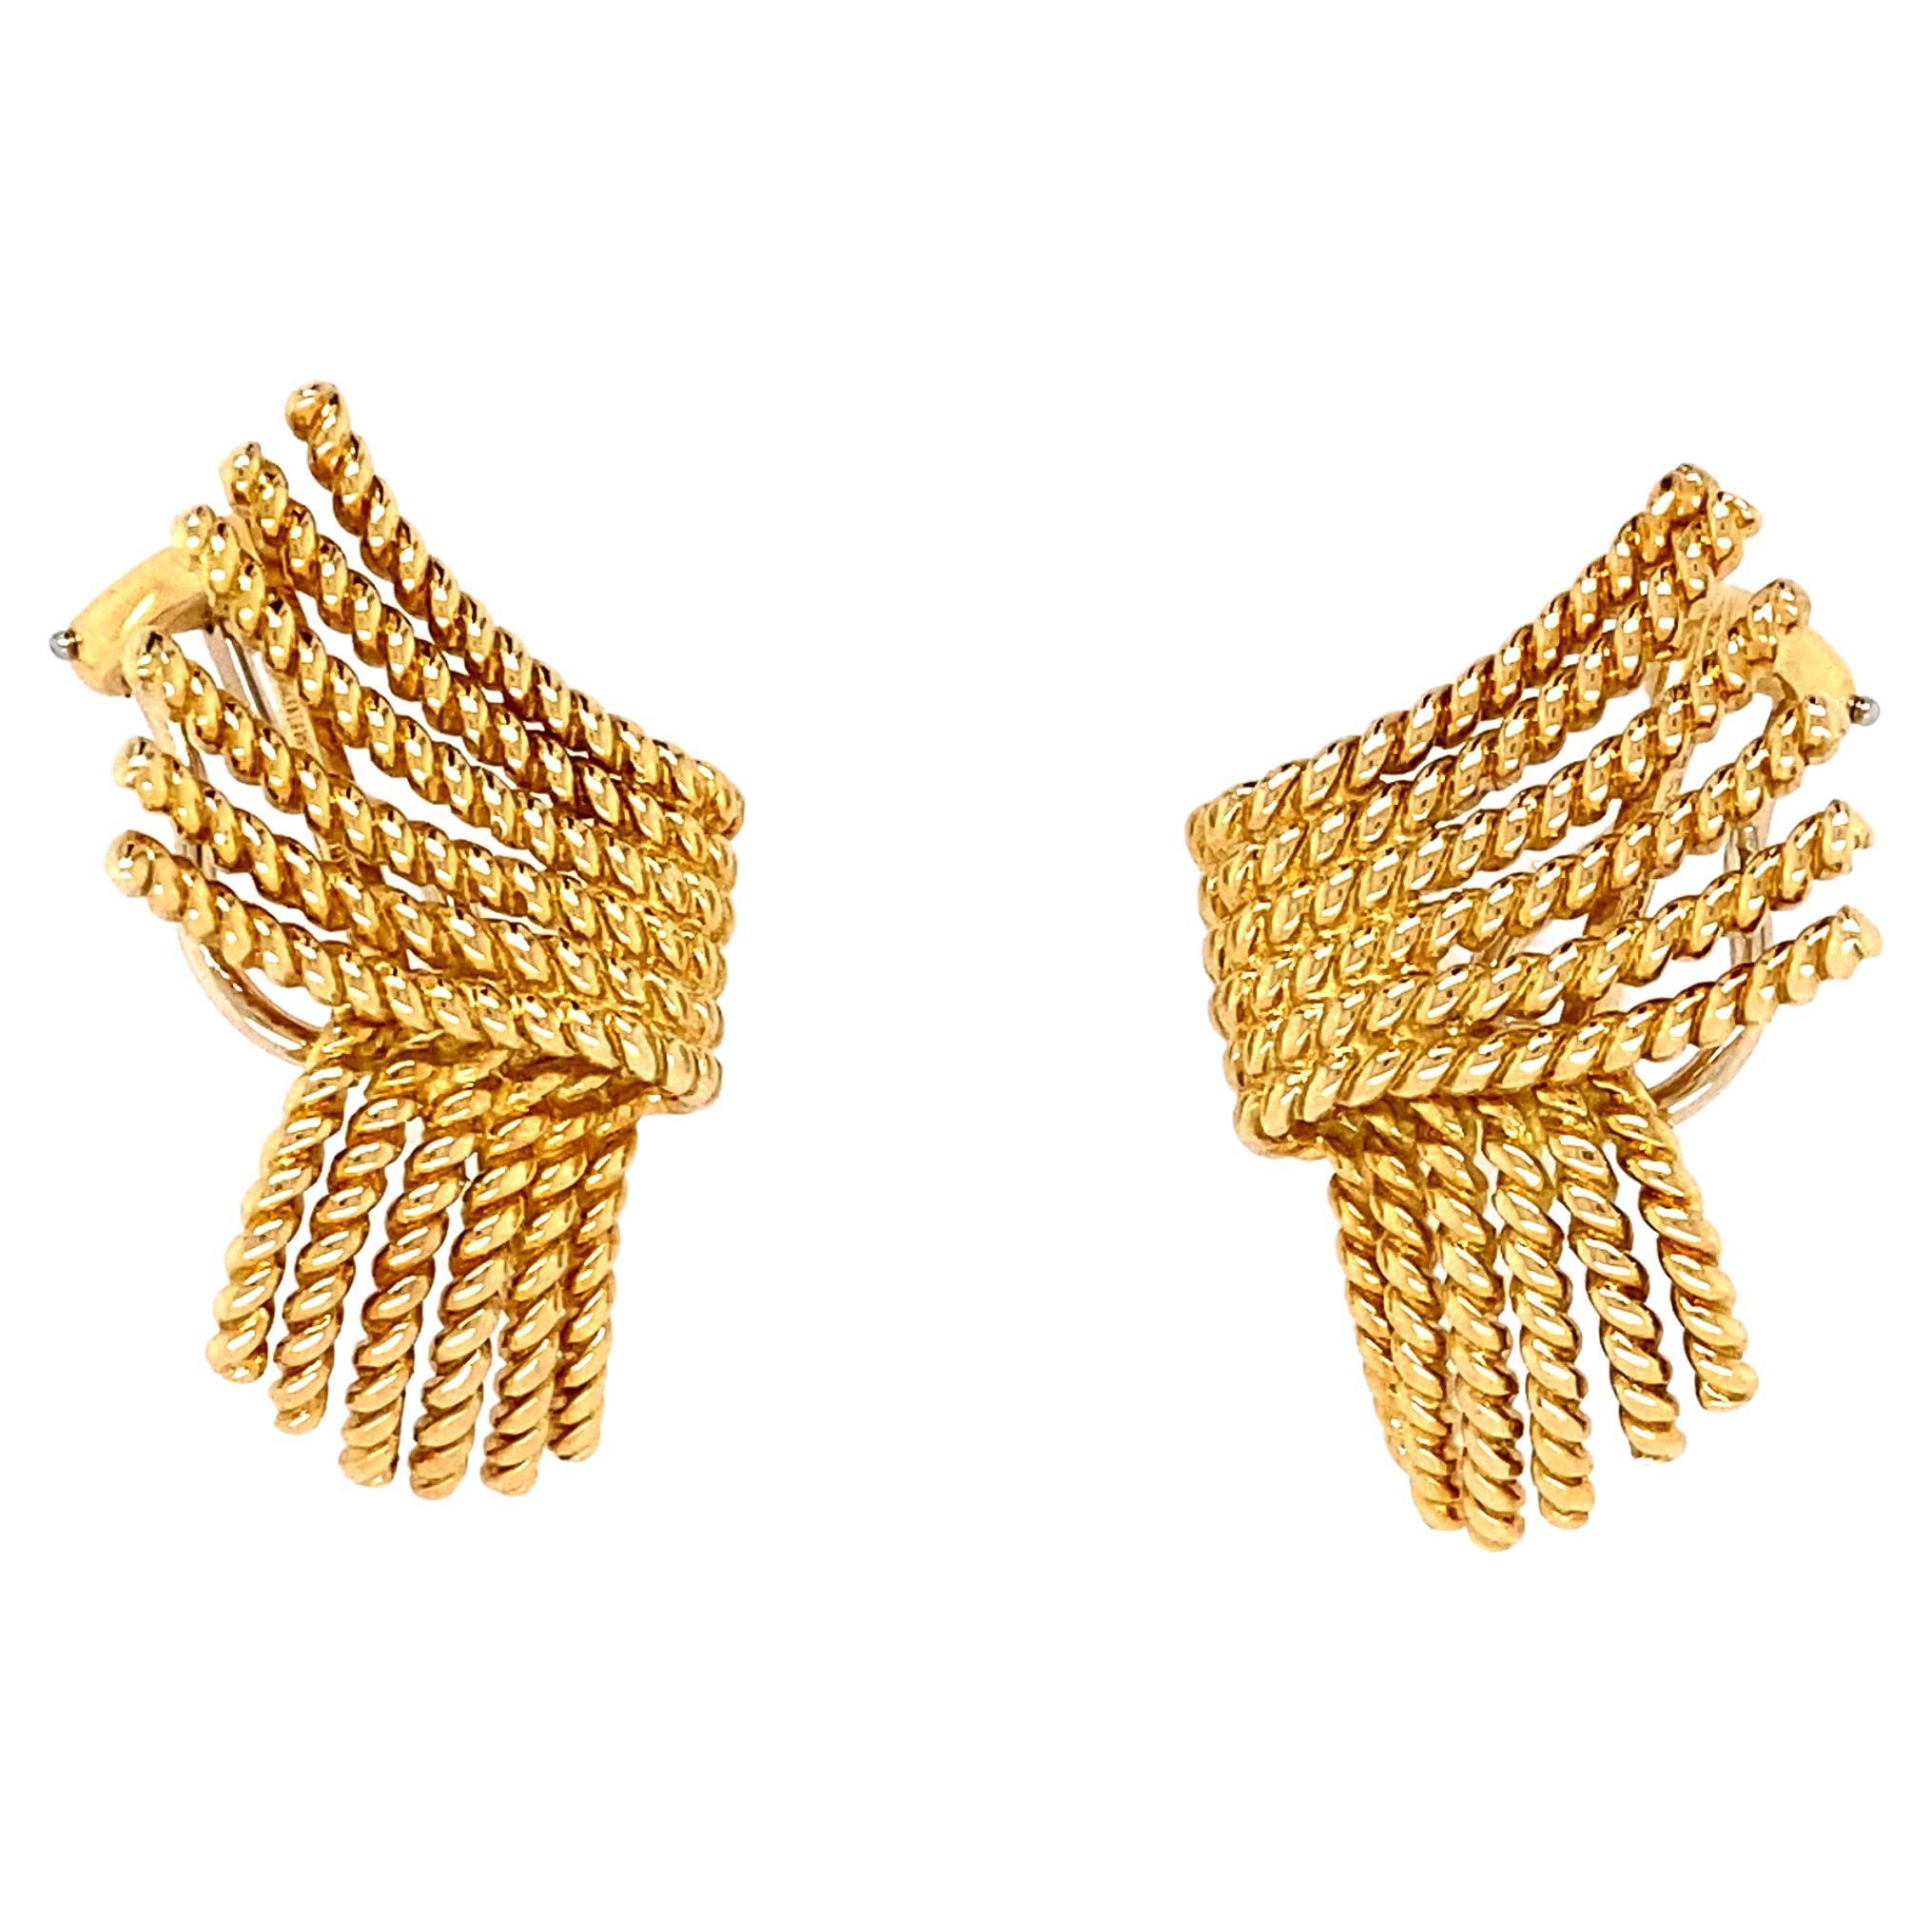 Tiffany & Co., Schlumberger 18k Gold Earclips